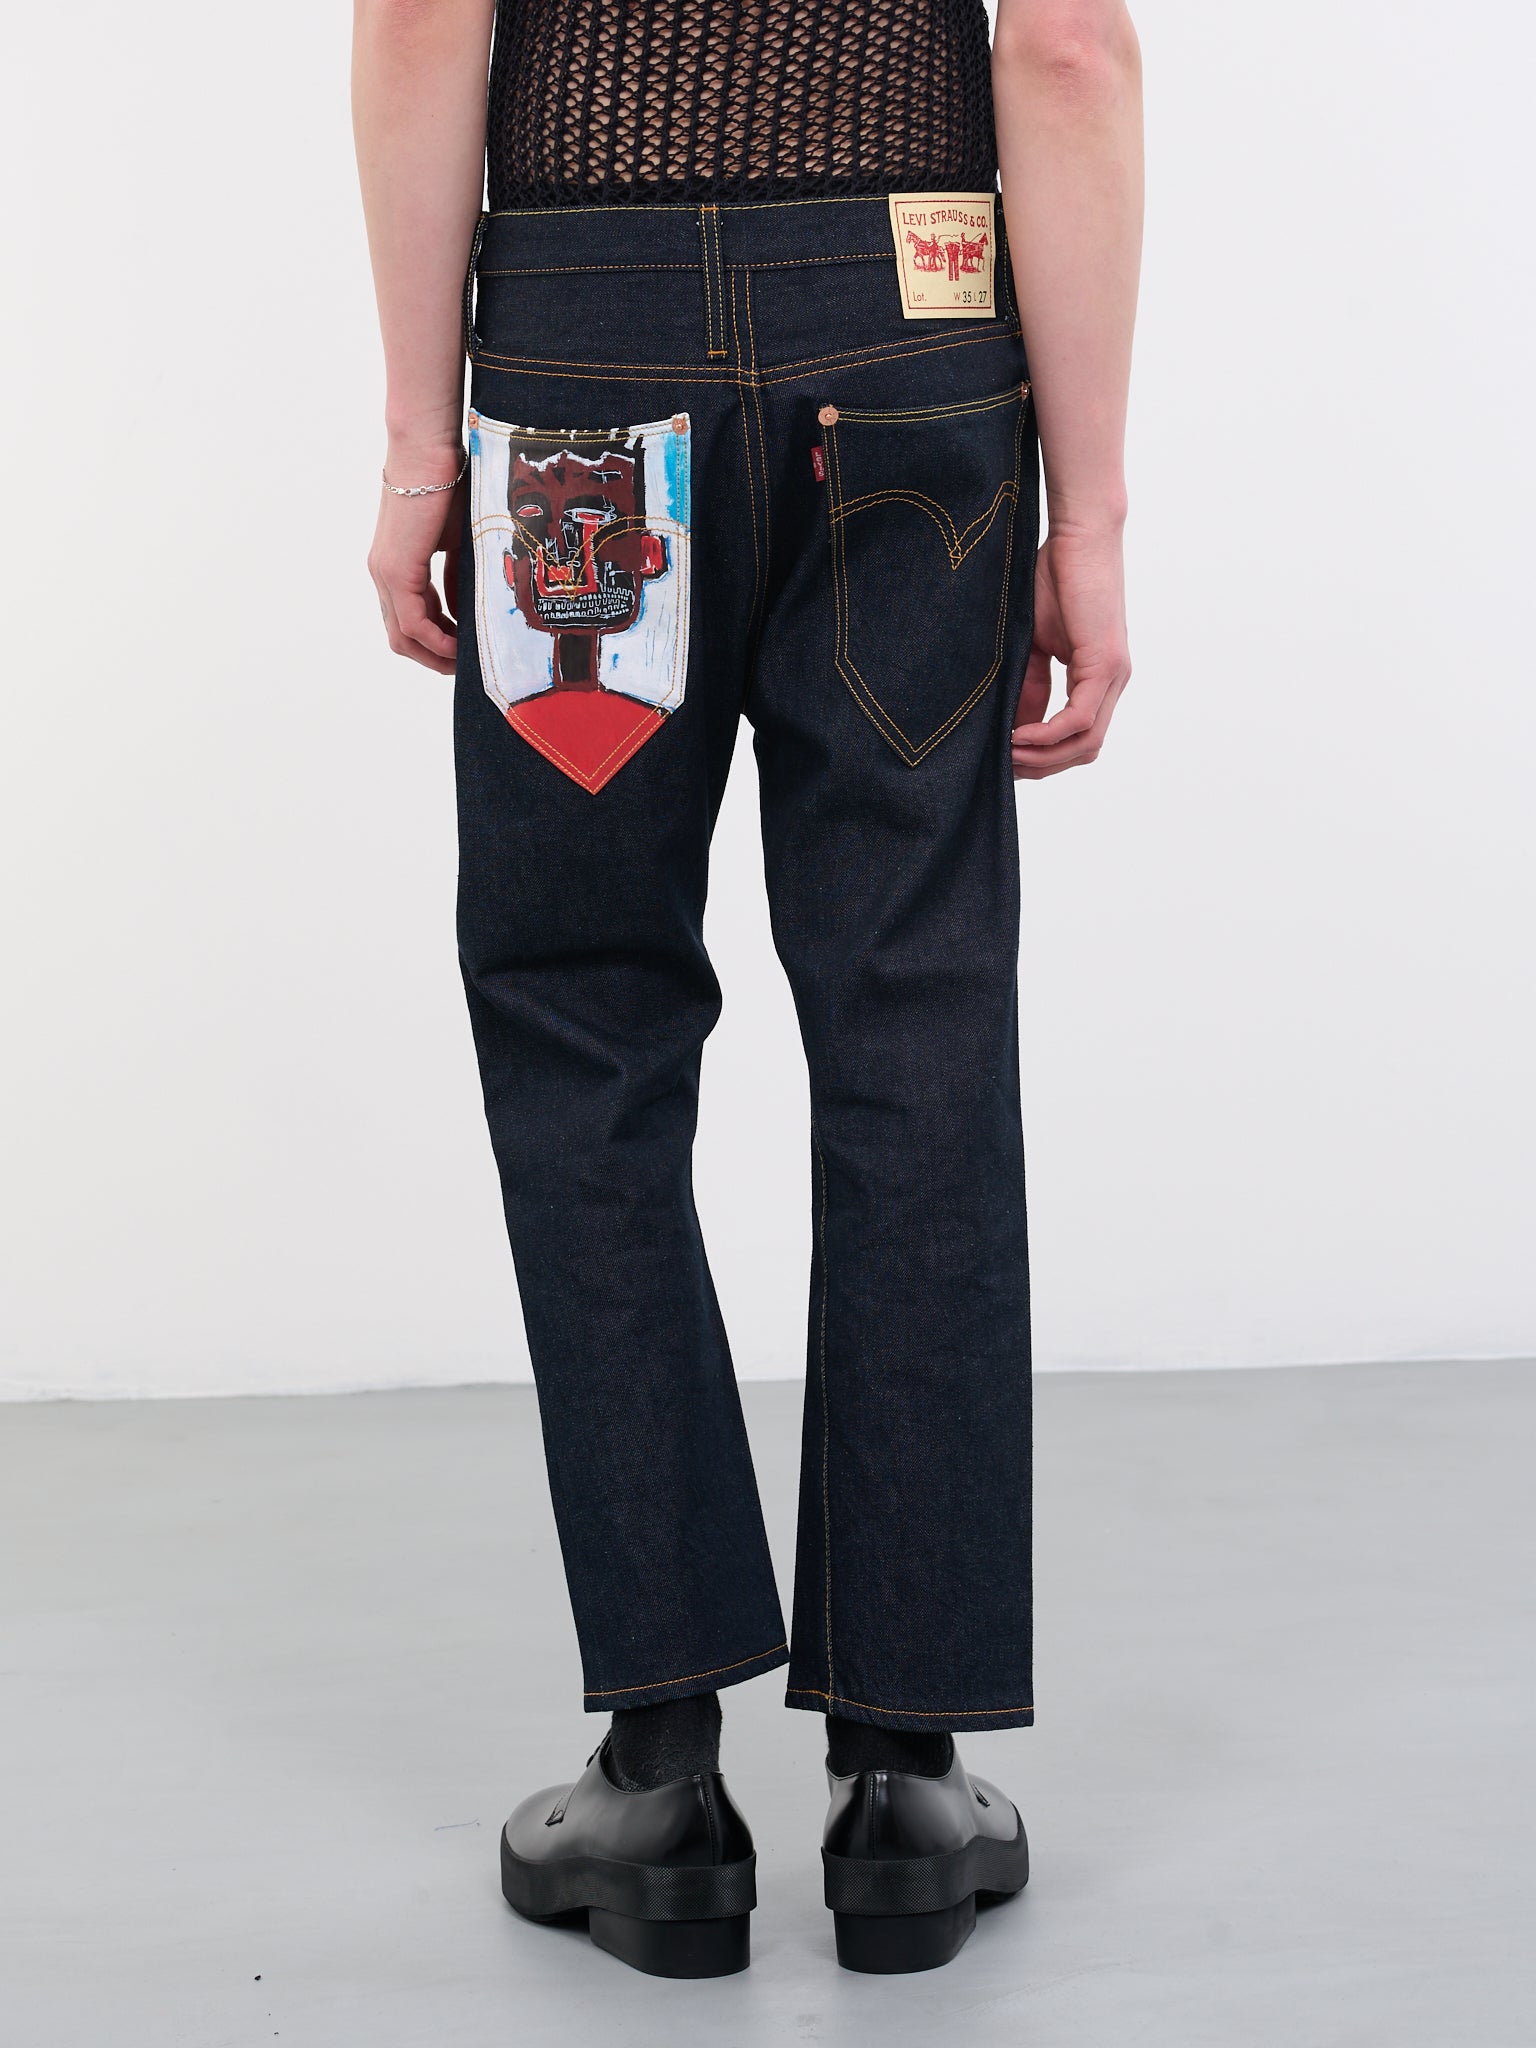 Basquiat Levi's Jeans (WK-P208-051-INDIGO-WHITE-BROWN)